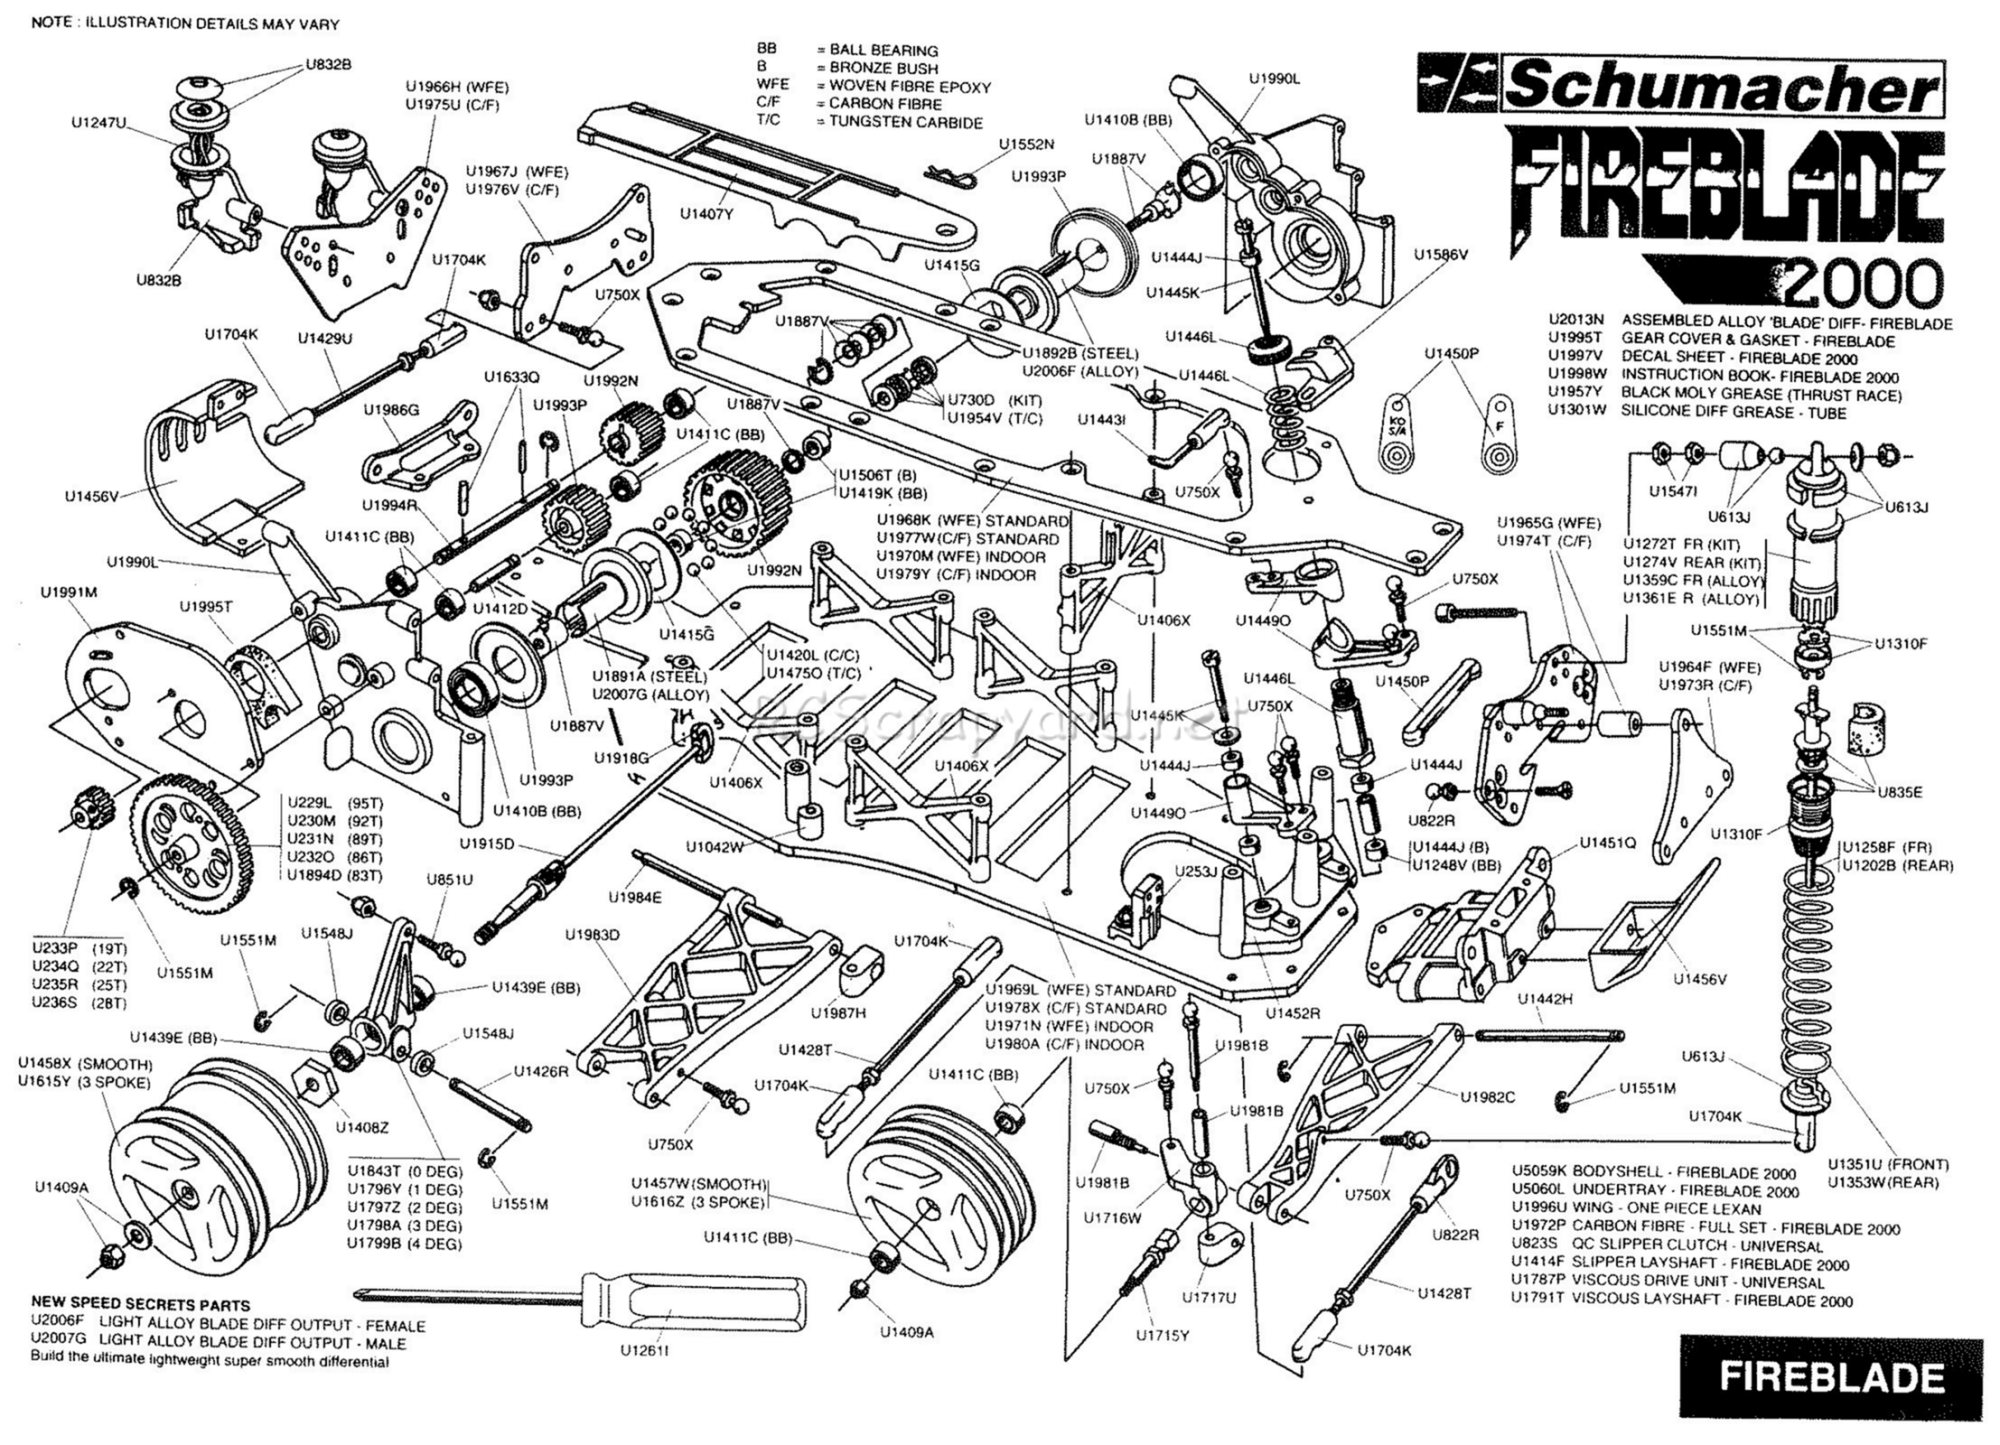 Schumacher - Fireblade 2000 - Exploded View - Page 1